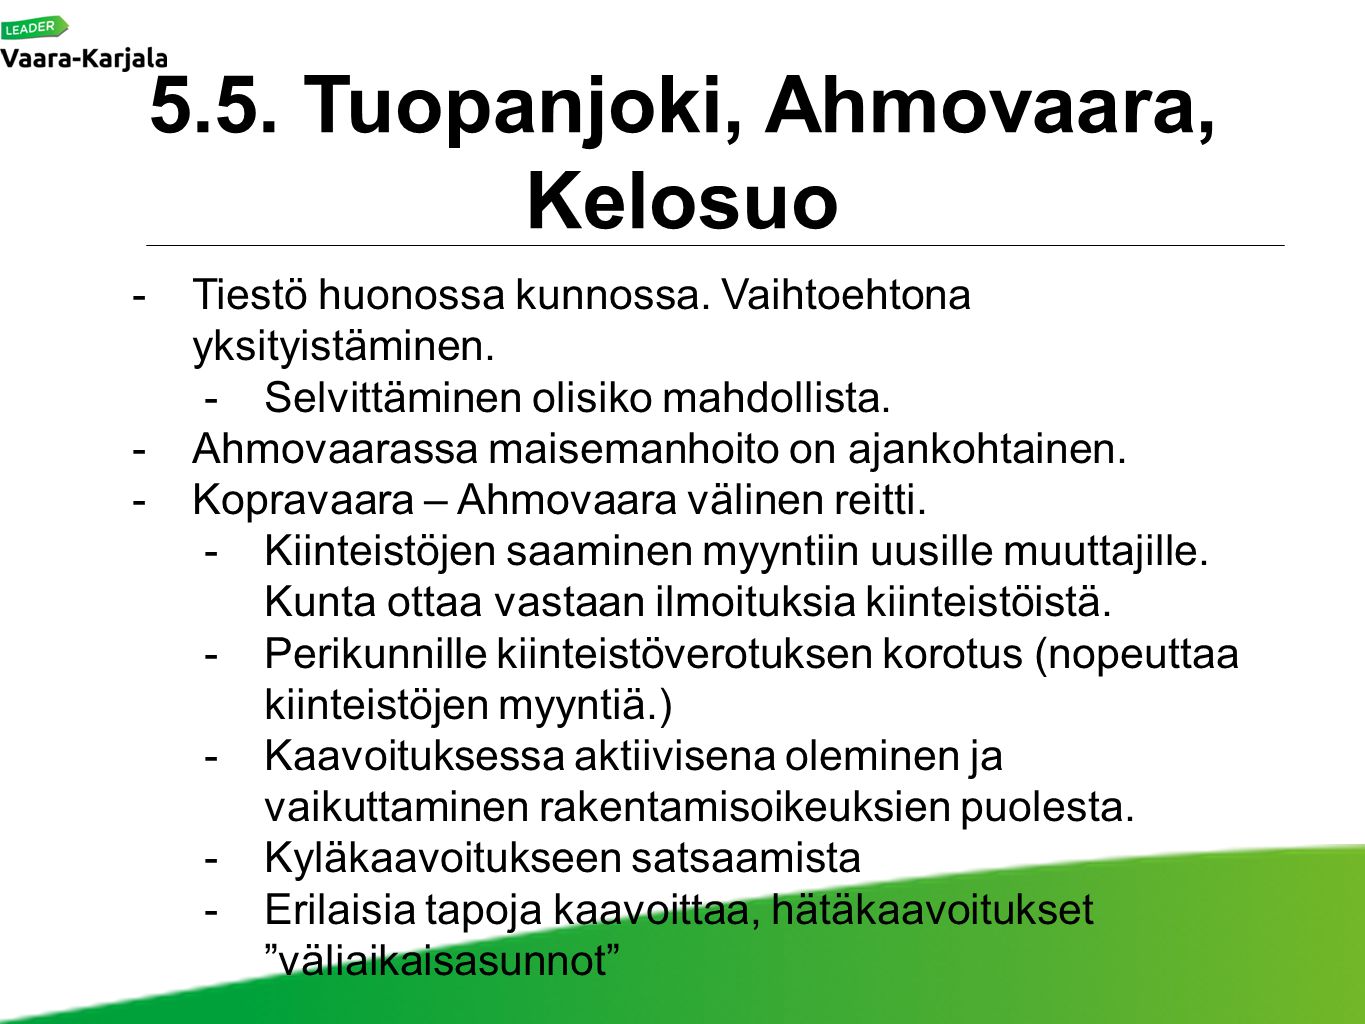 5.5. Tuopanjoki, Ahmovaara, Kelosuo